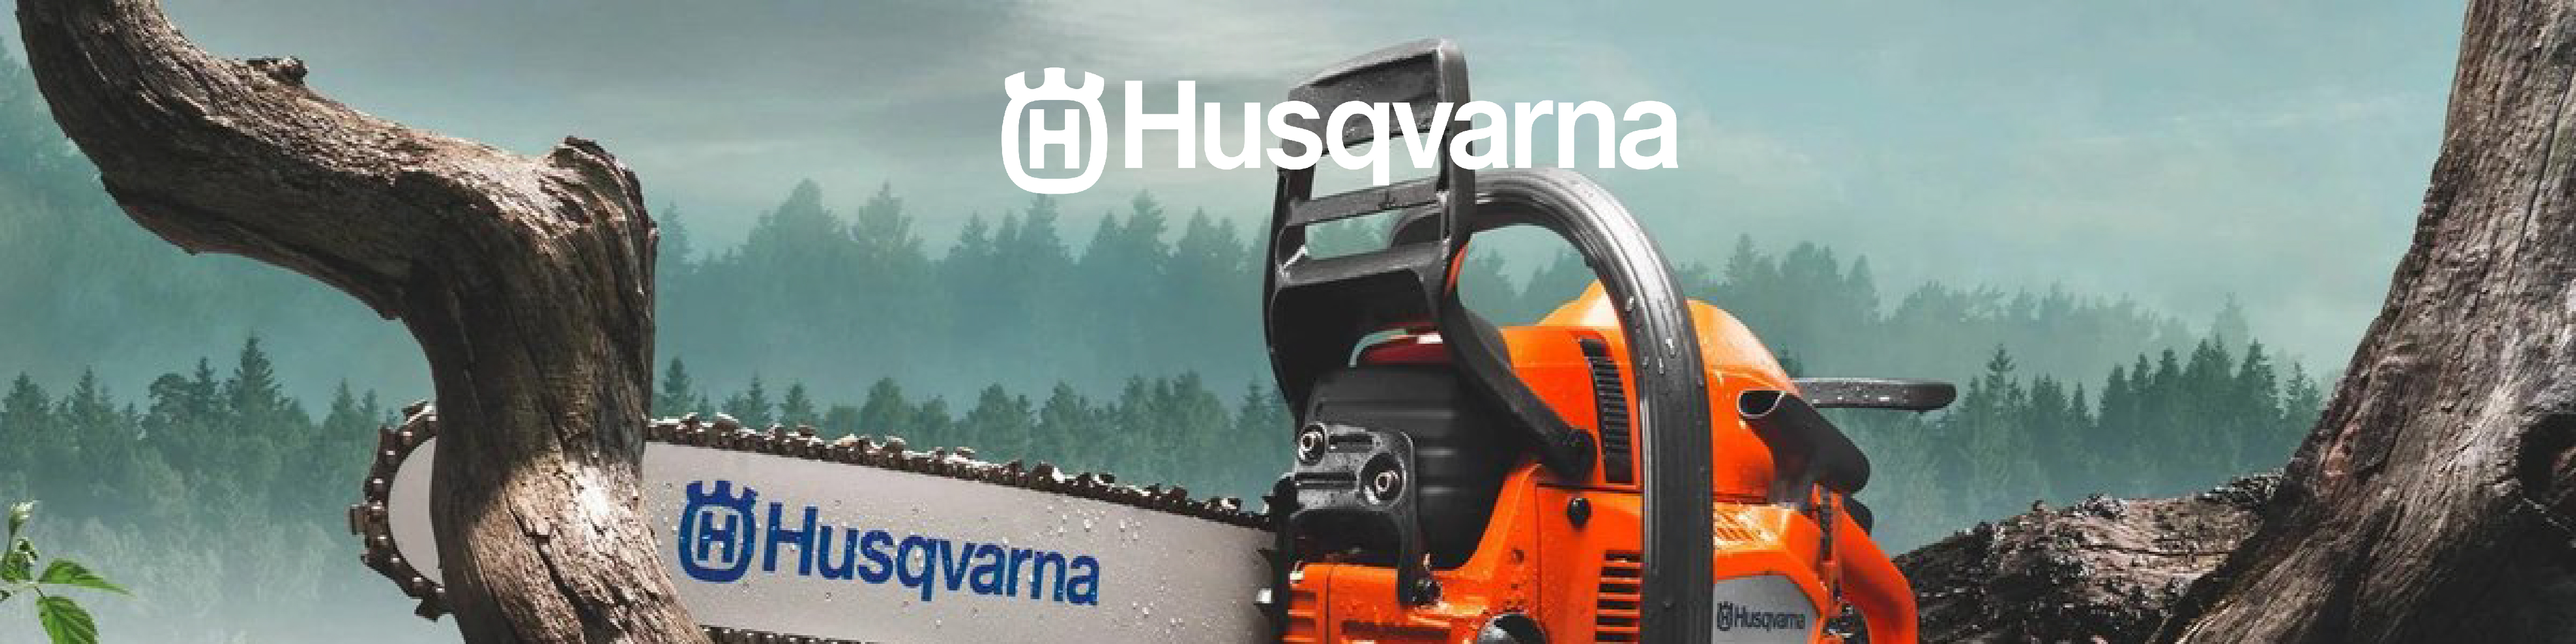 husqvarna-banner